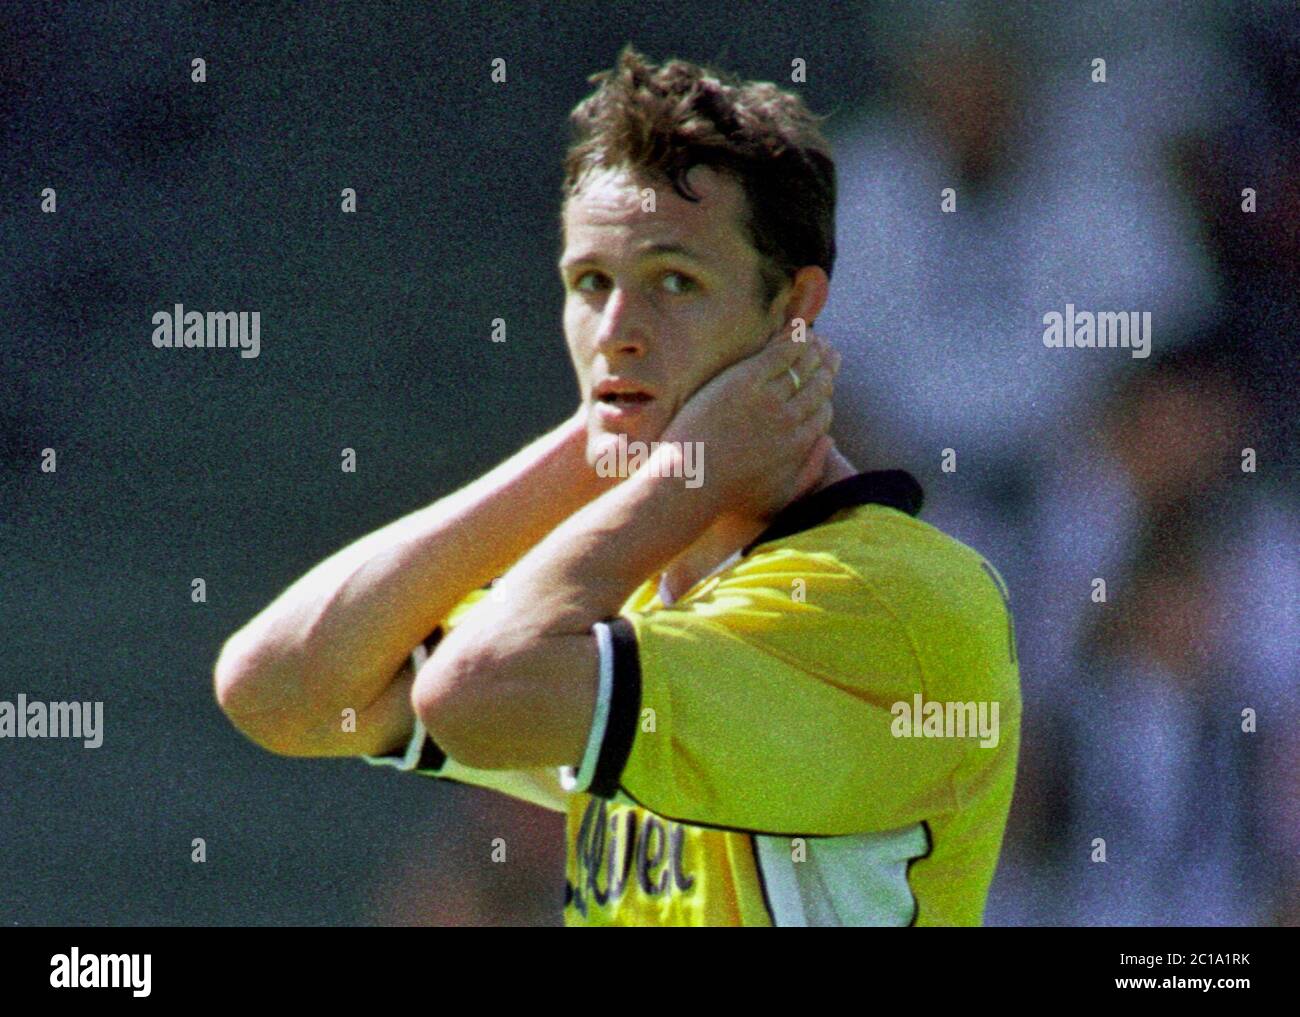 Dortmund Germany 8.8.1998, Football: friendly match Borussia Dortmund (BVB) vs Ajax Amsterdam (Ajax) —  Heiko HERRLICH (BVB) Stock Photo